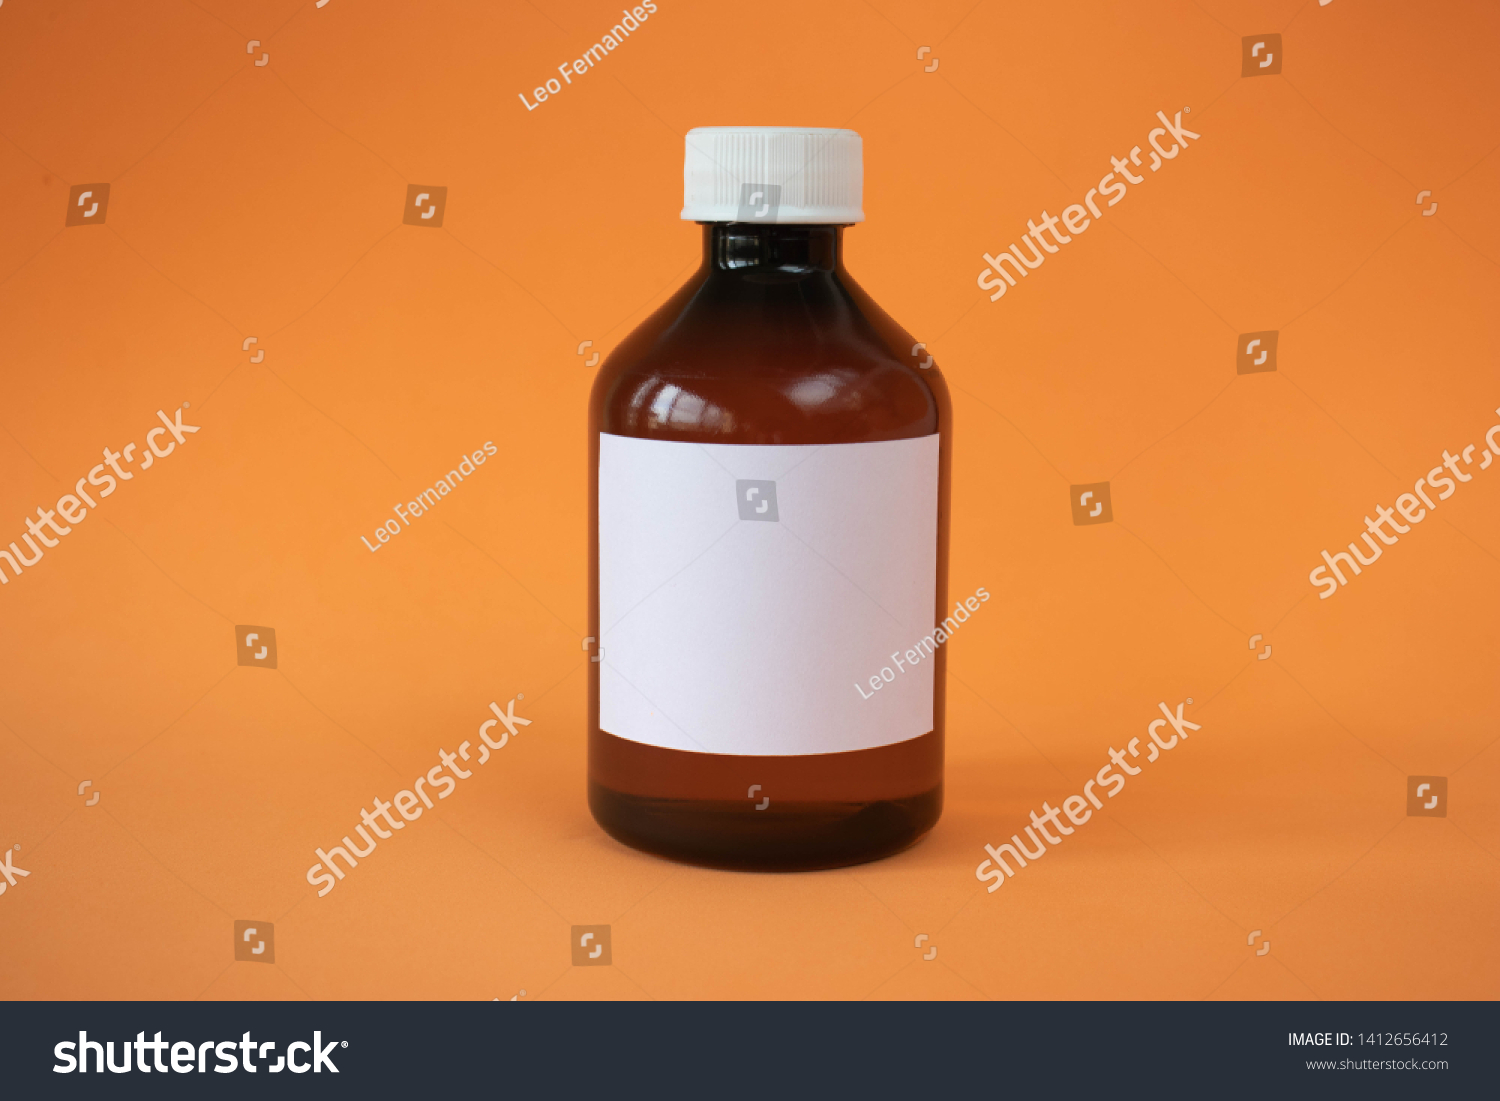 Download Amber Medicine Plastic Bottle On Orange Healthcare Medical Objects Stock Image Yellowimages Mockups